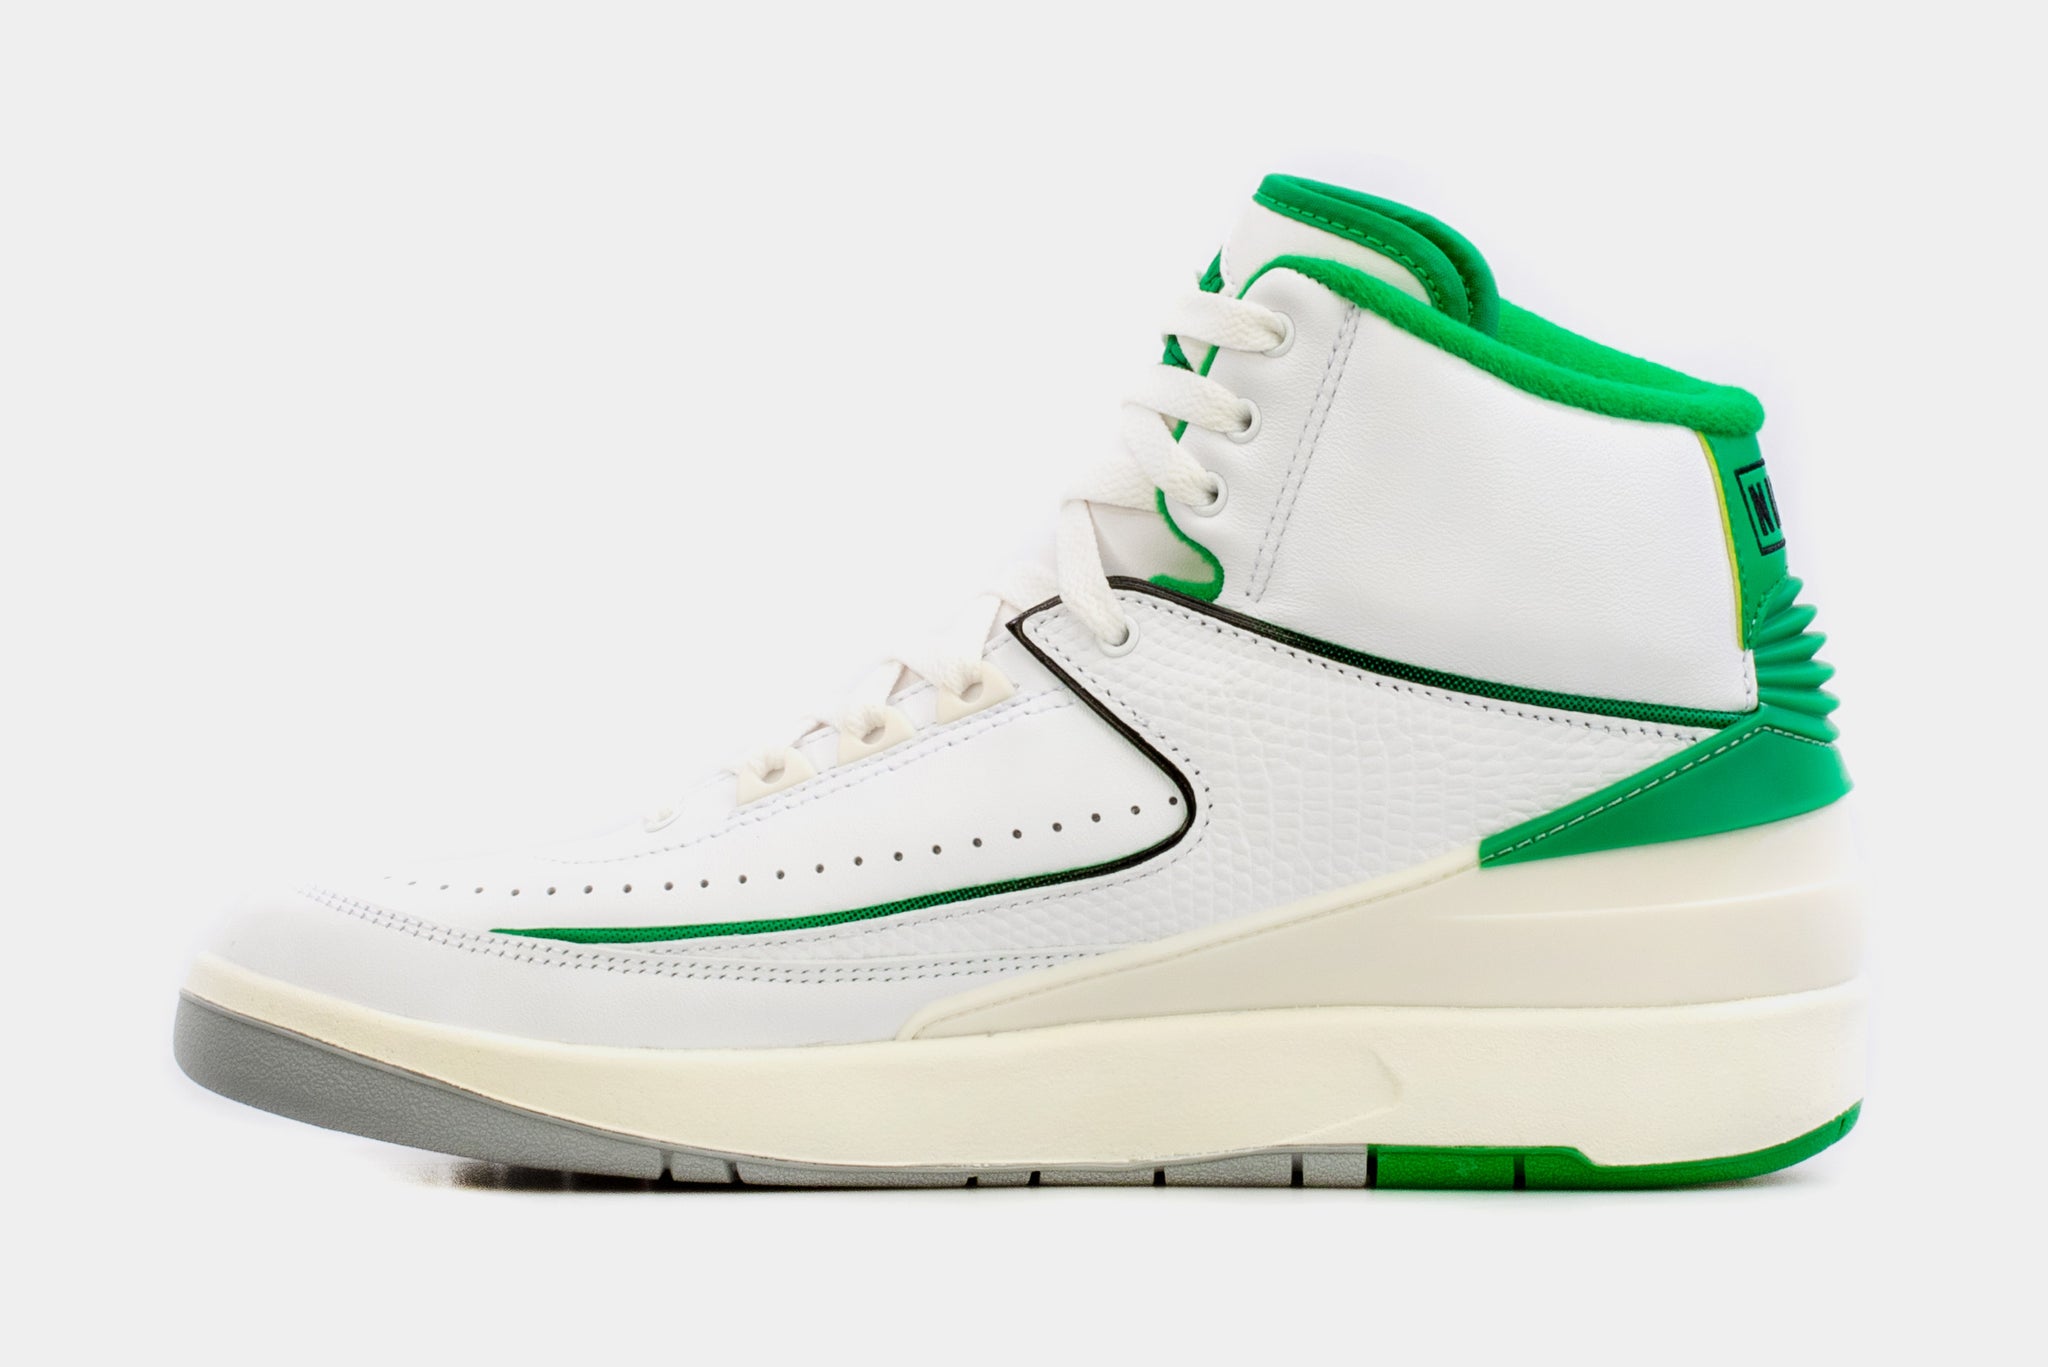 Jordan Air Jordan 2 Retro Lucky Green Mens Lifestyle Shoes White